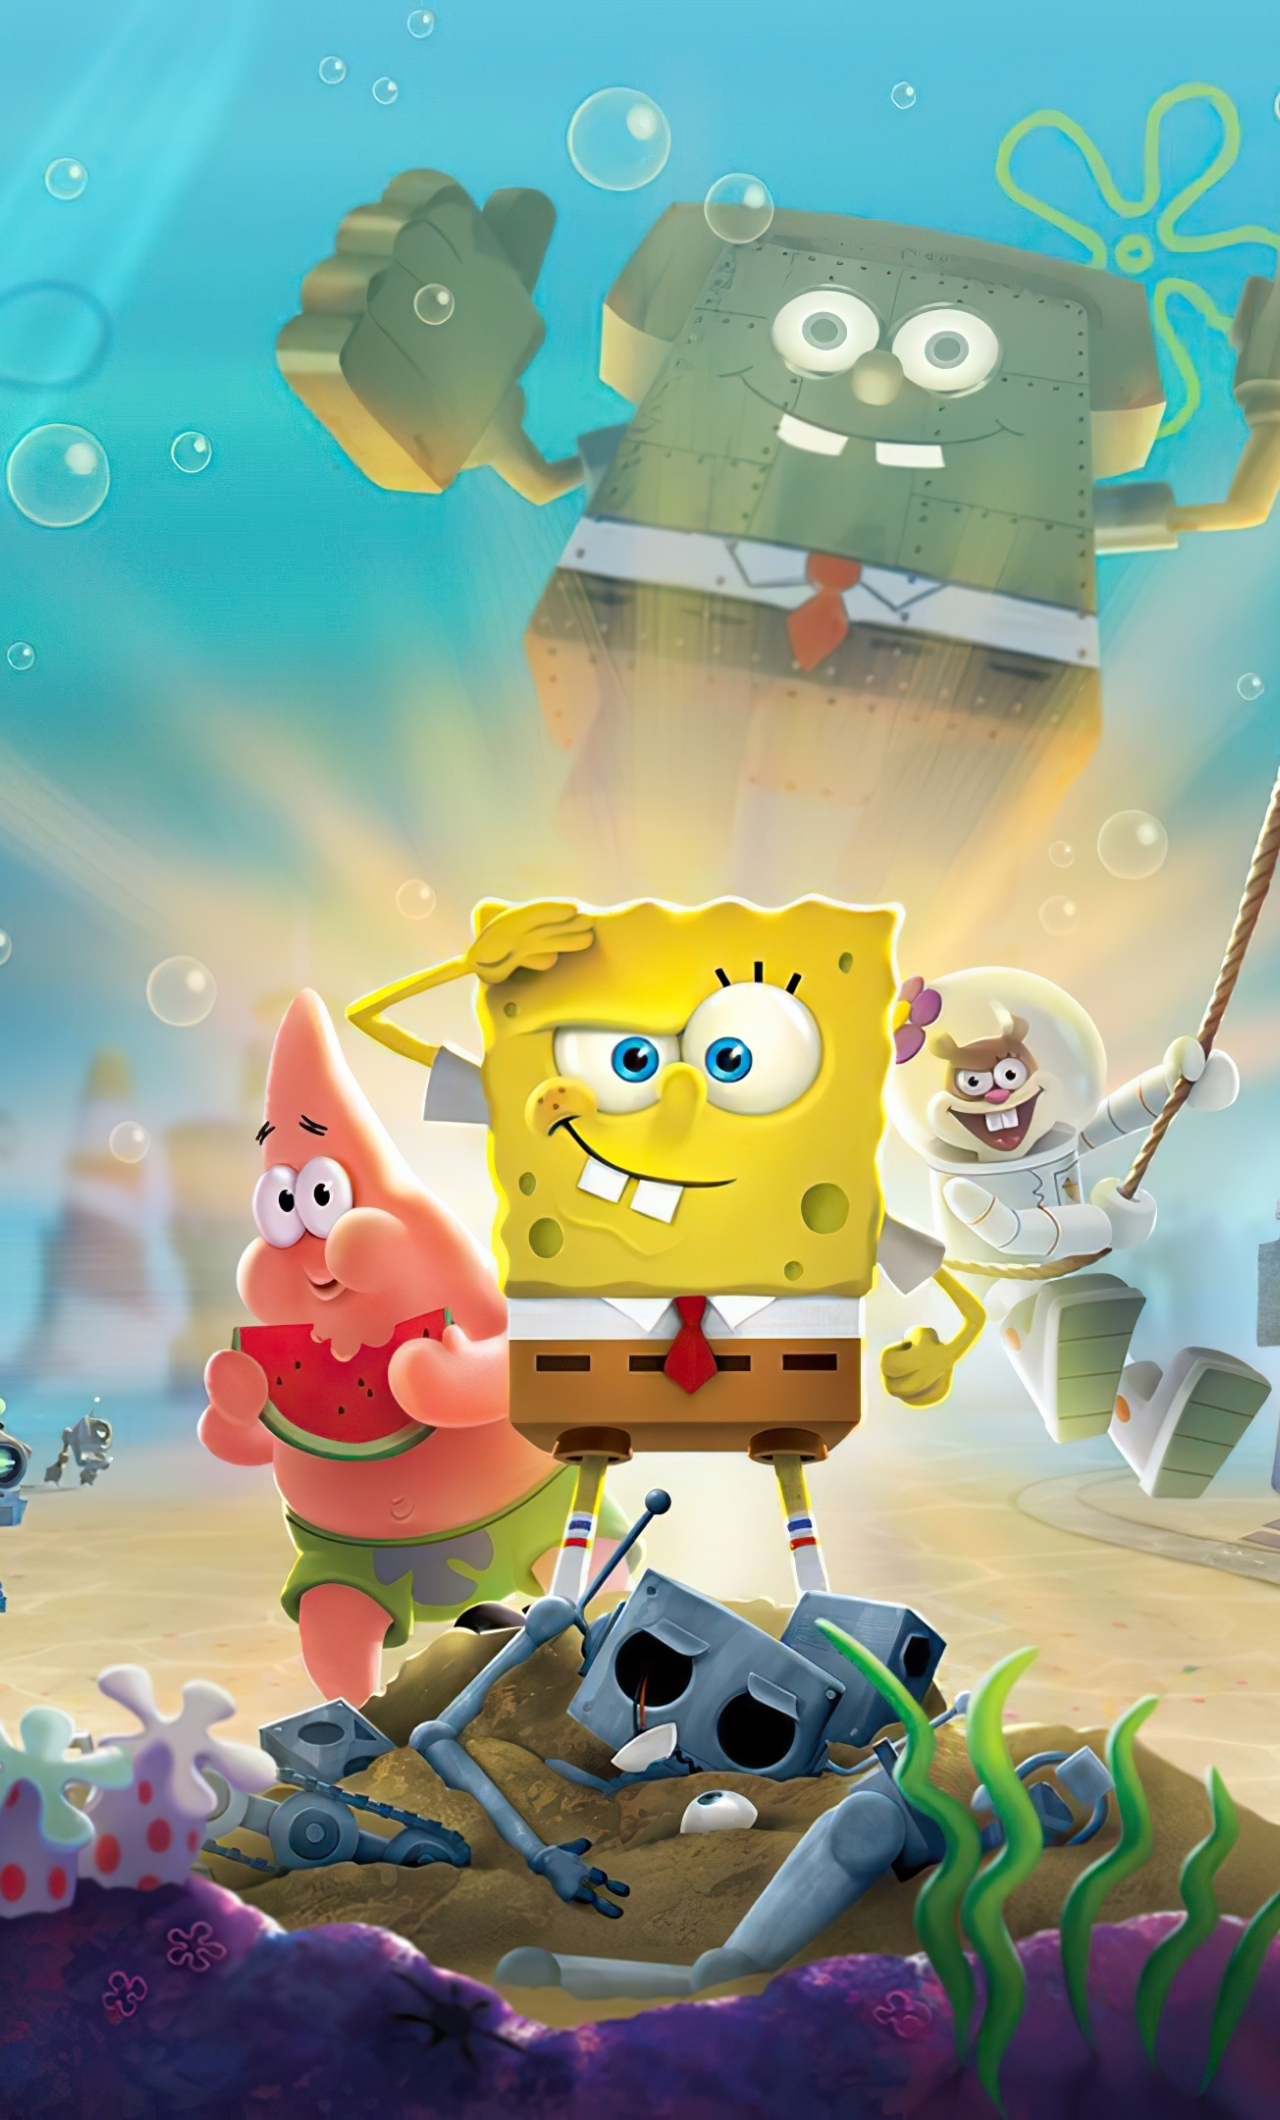 Download Spongebob Squarepants Underwater Cartoon 1280x21 Wallpaper Iphone 6 Plus 1280x21 Hd Image Background